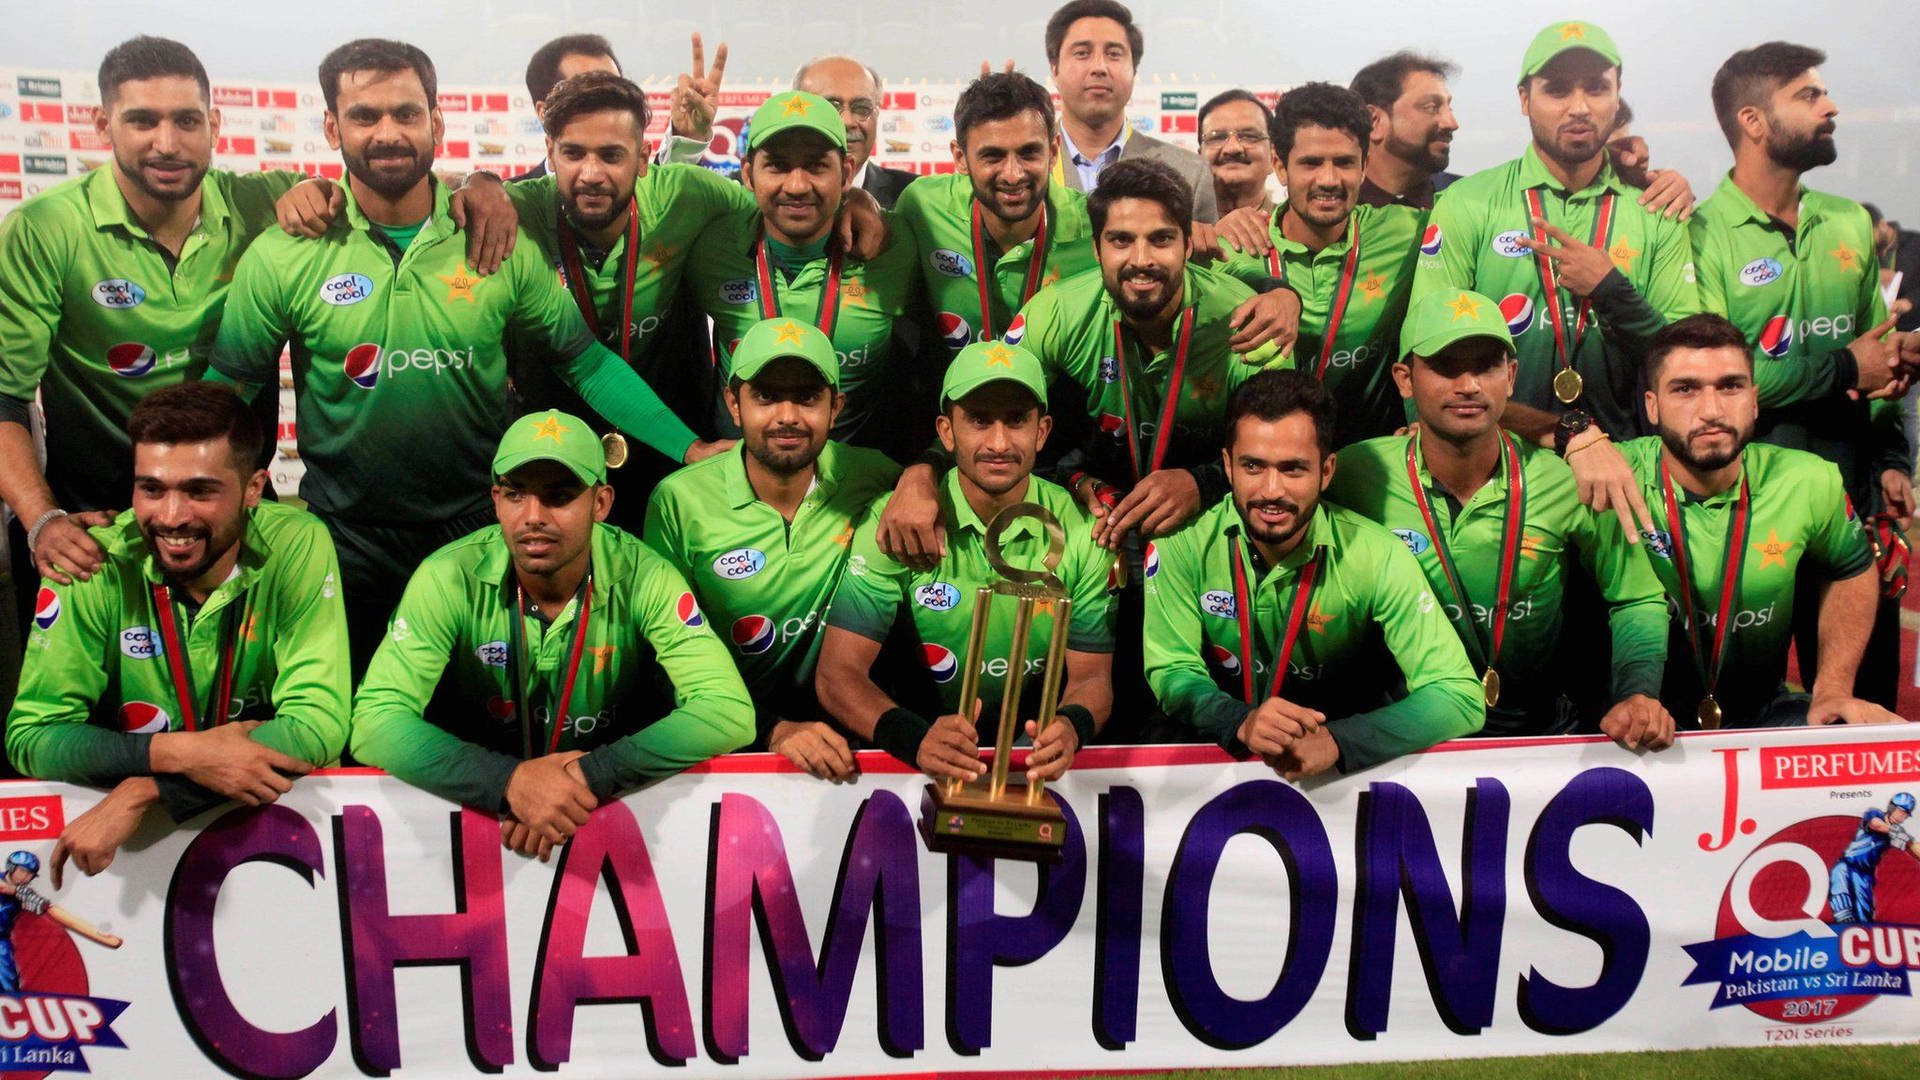 Campeonesde Cricket De Pakistán Fondo de pantalla